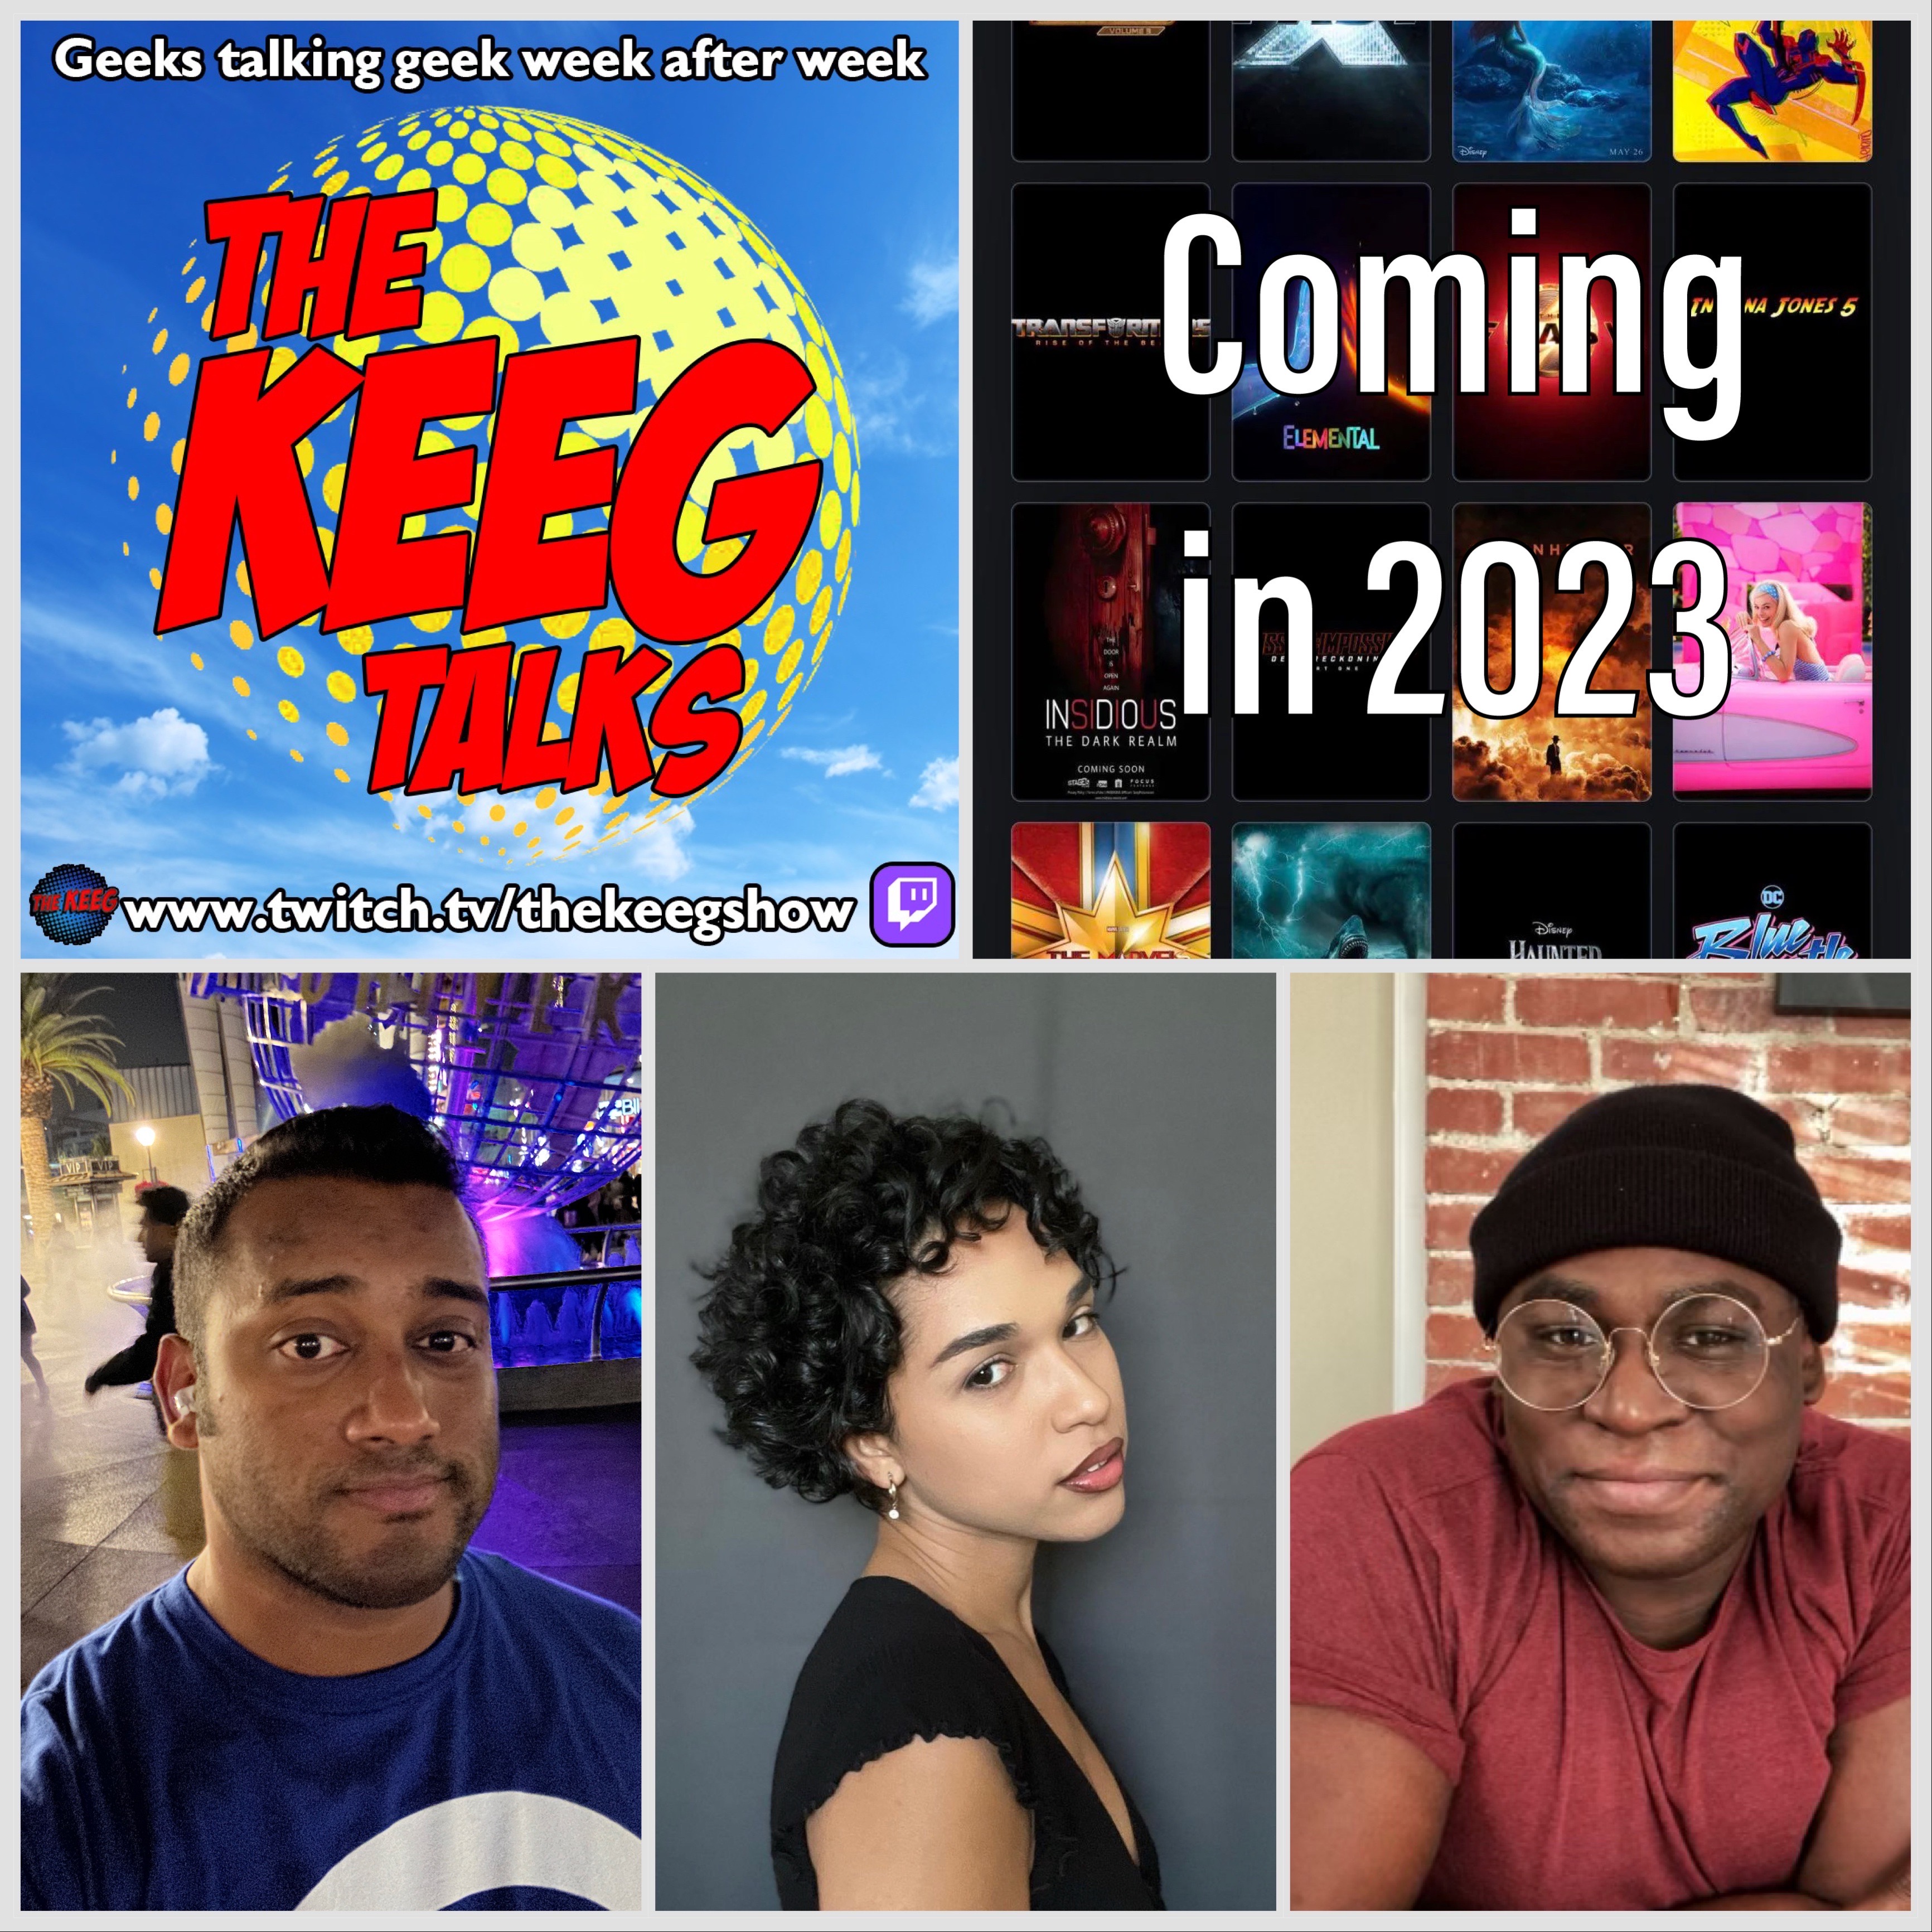 “Coming in 2023”- The Keeg Talks ep902